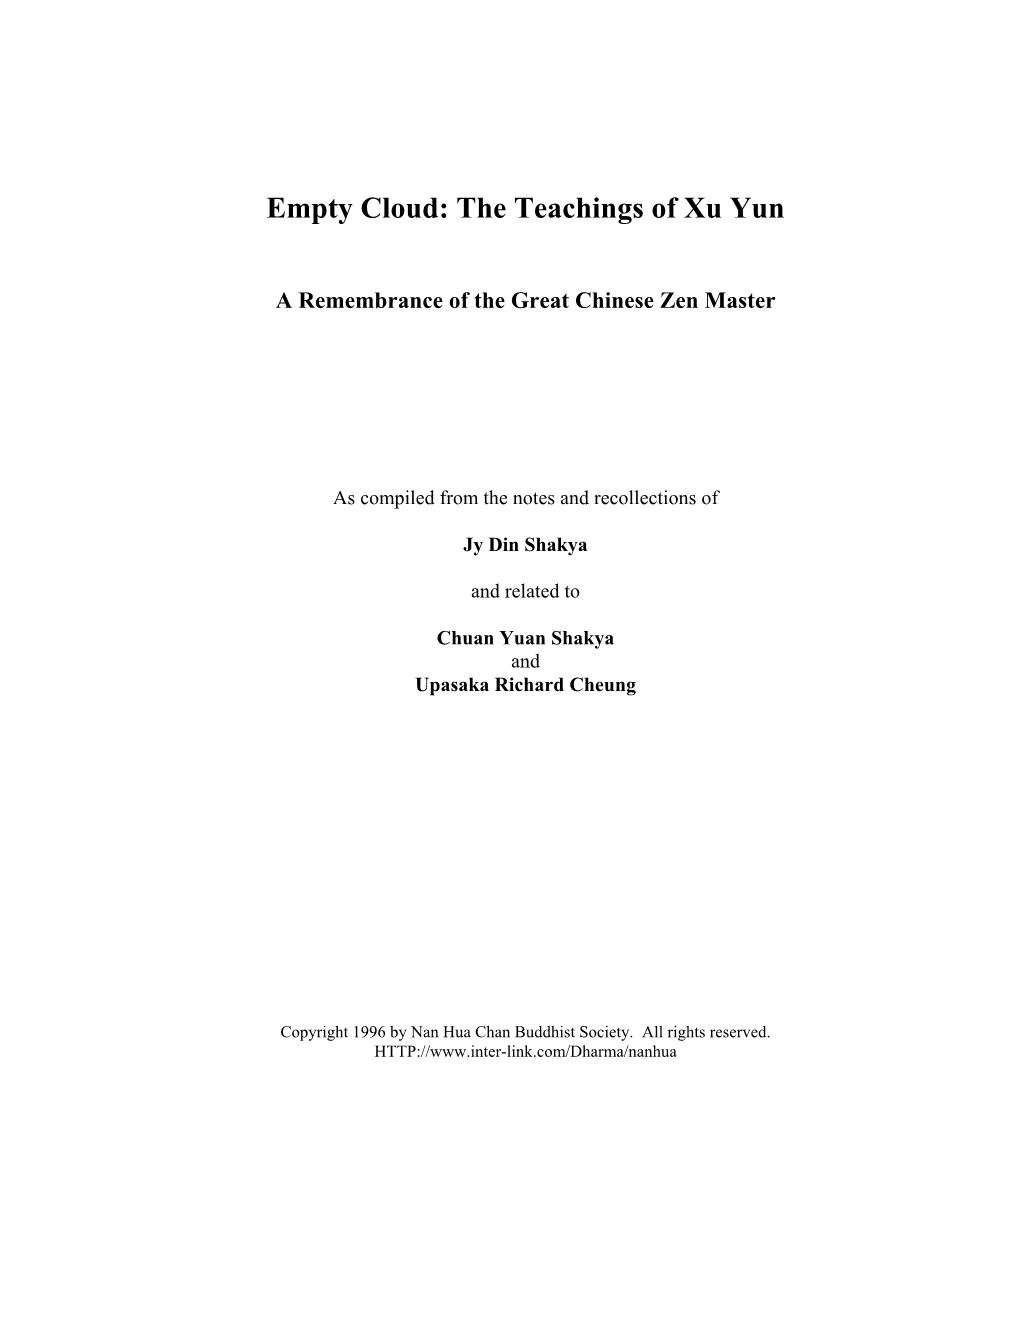 The Teachings of Xu Yun